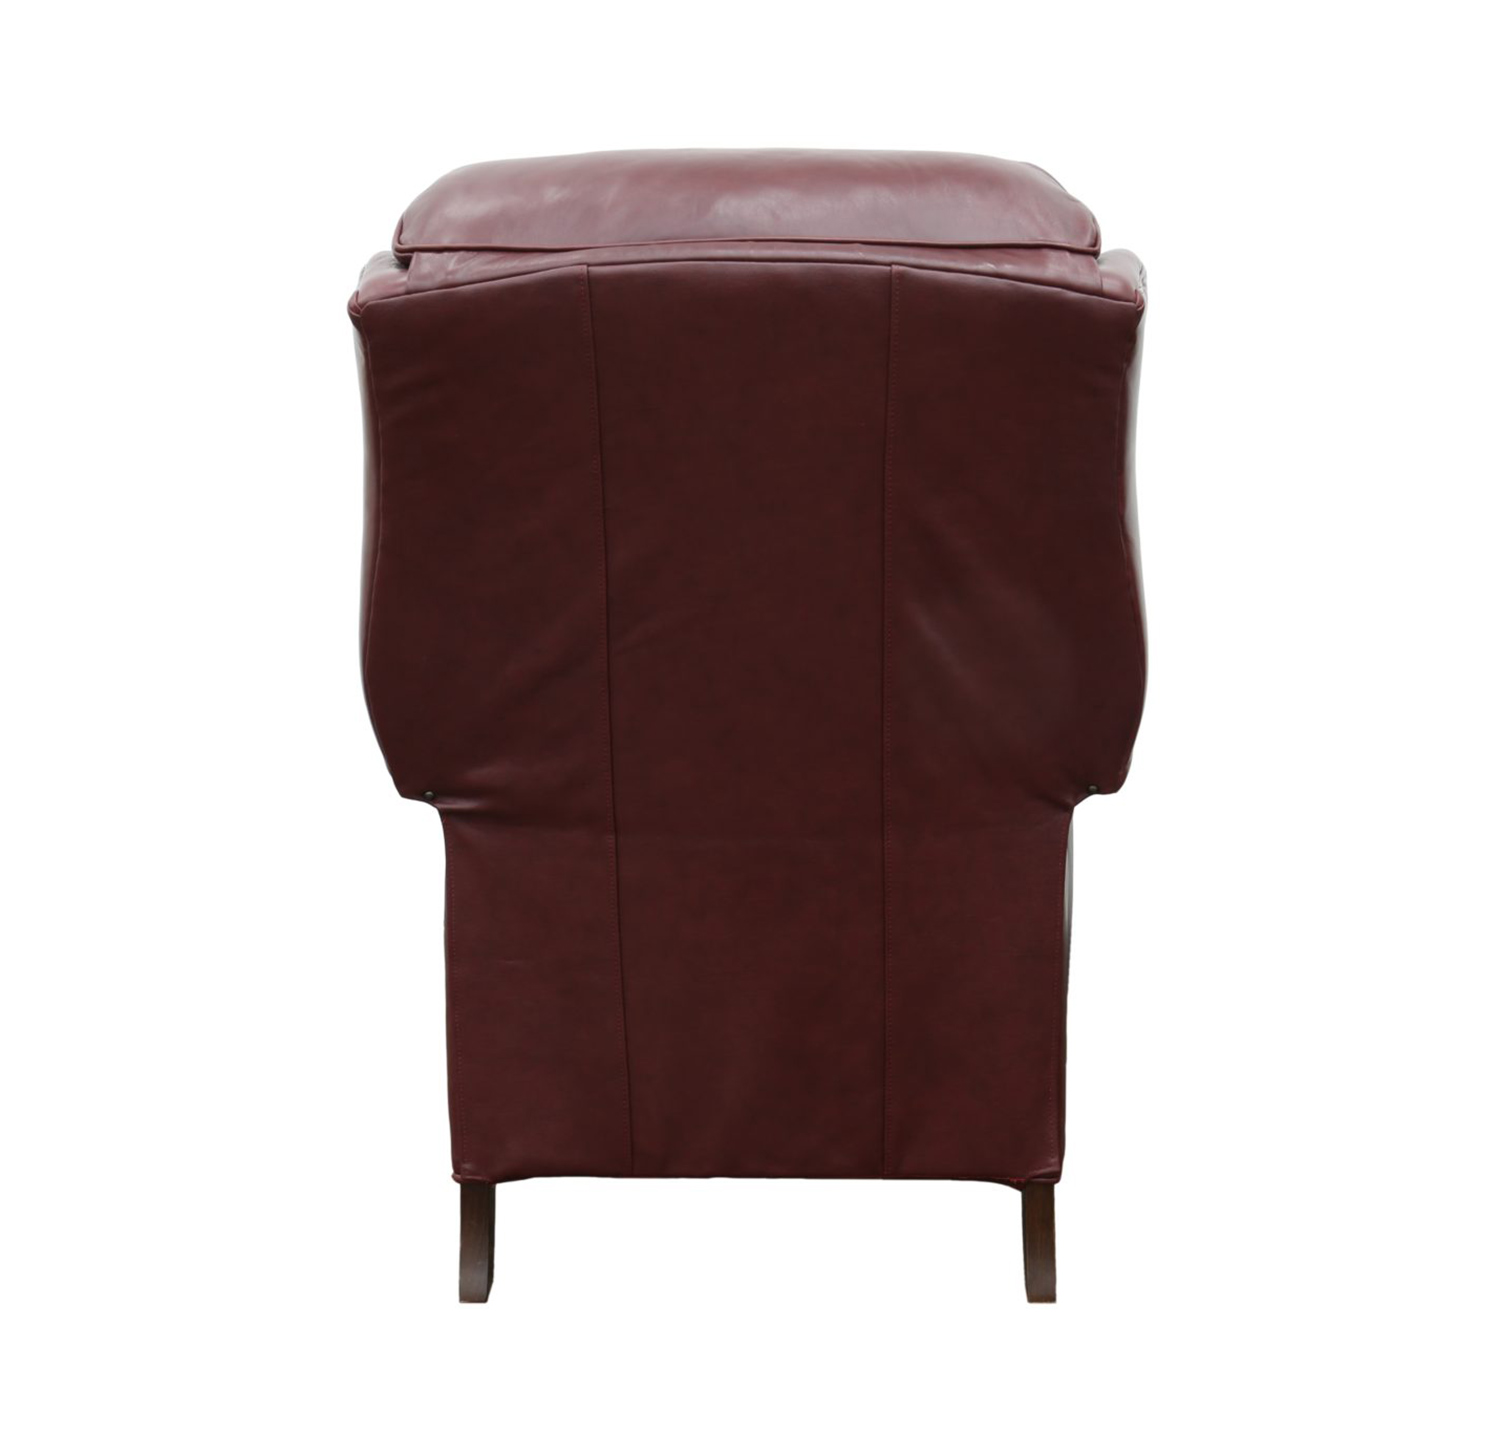 Barcalounger Danbury Recliner Chair - Shoreham Wine/all leather